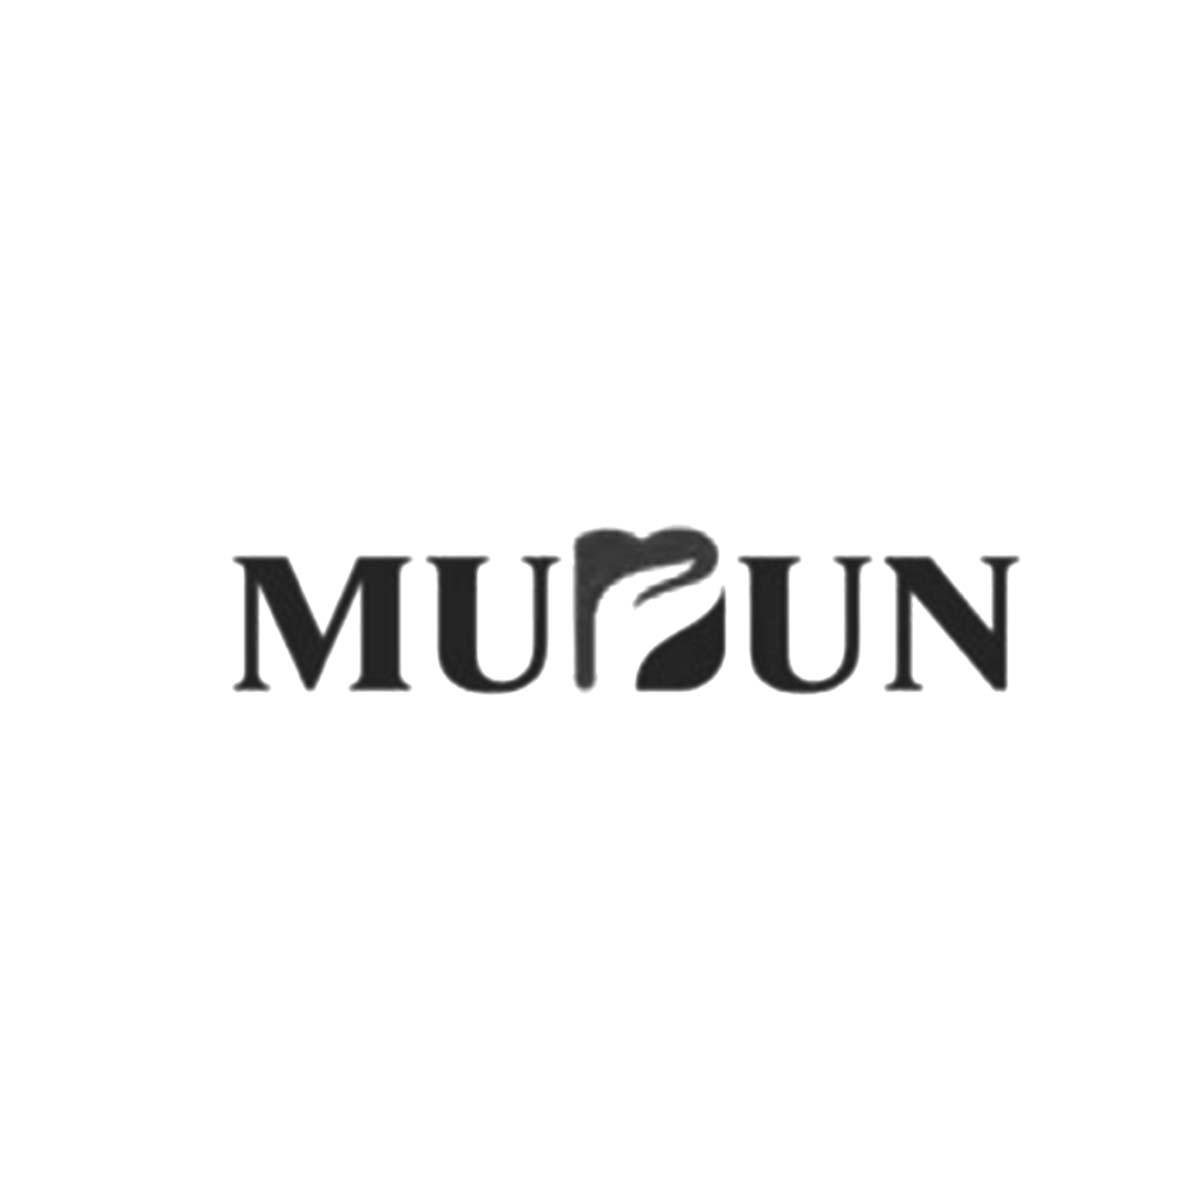 MUDUN